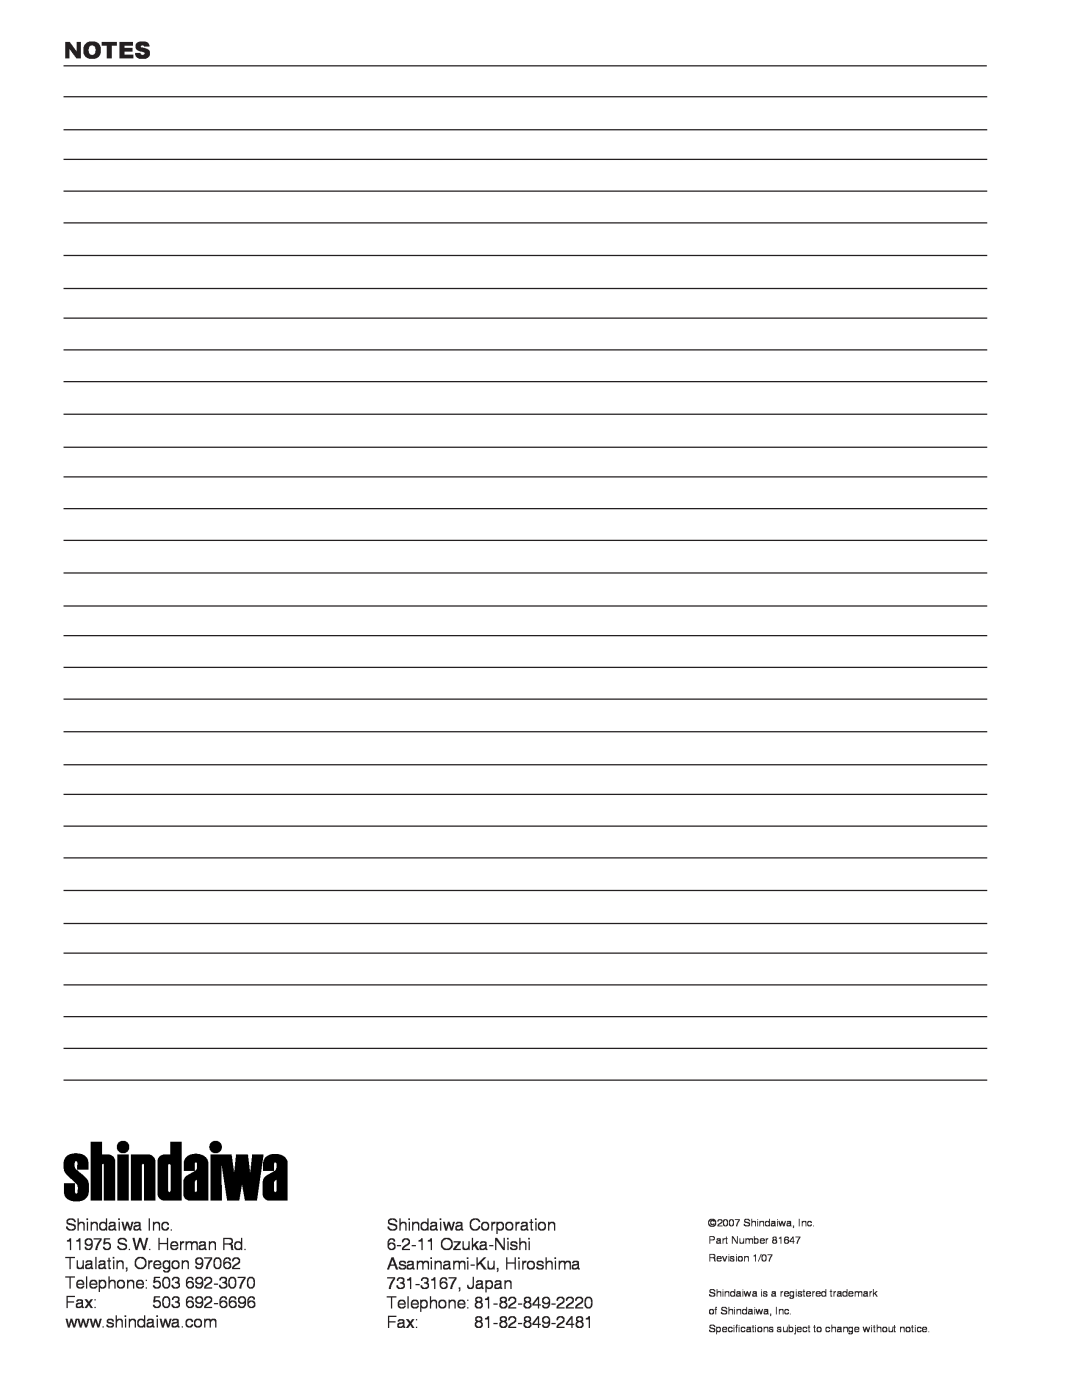 Shindaiwa T272X manual Shindaiwa, Inc Part Number Revision 1/07, Shindaiwa is a registered trademark of Shindaiwa, Inc 